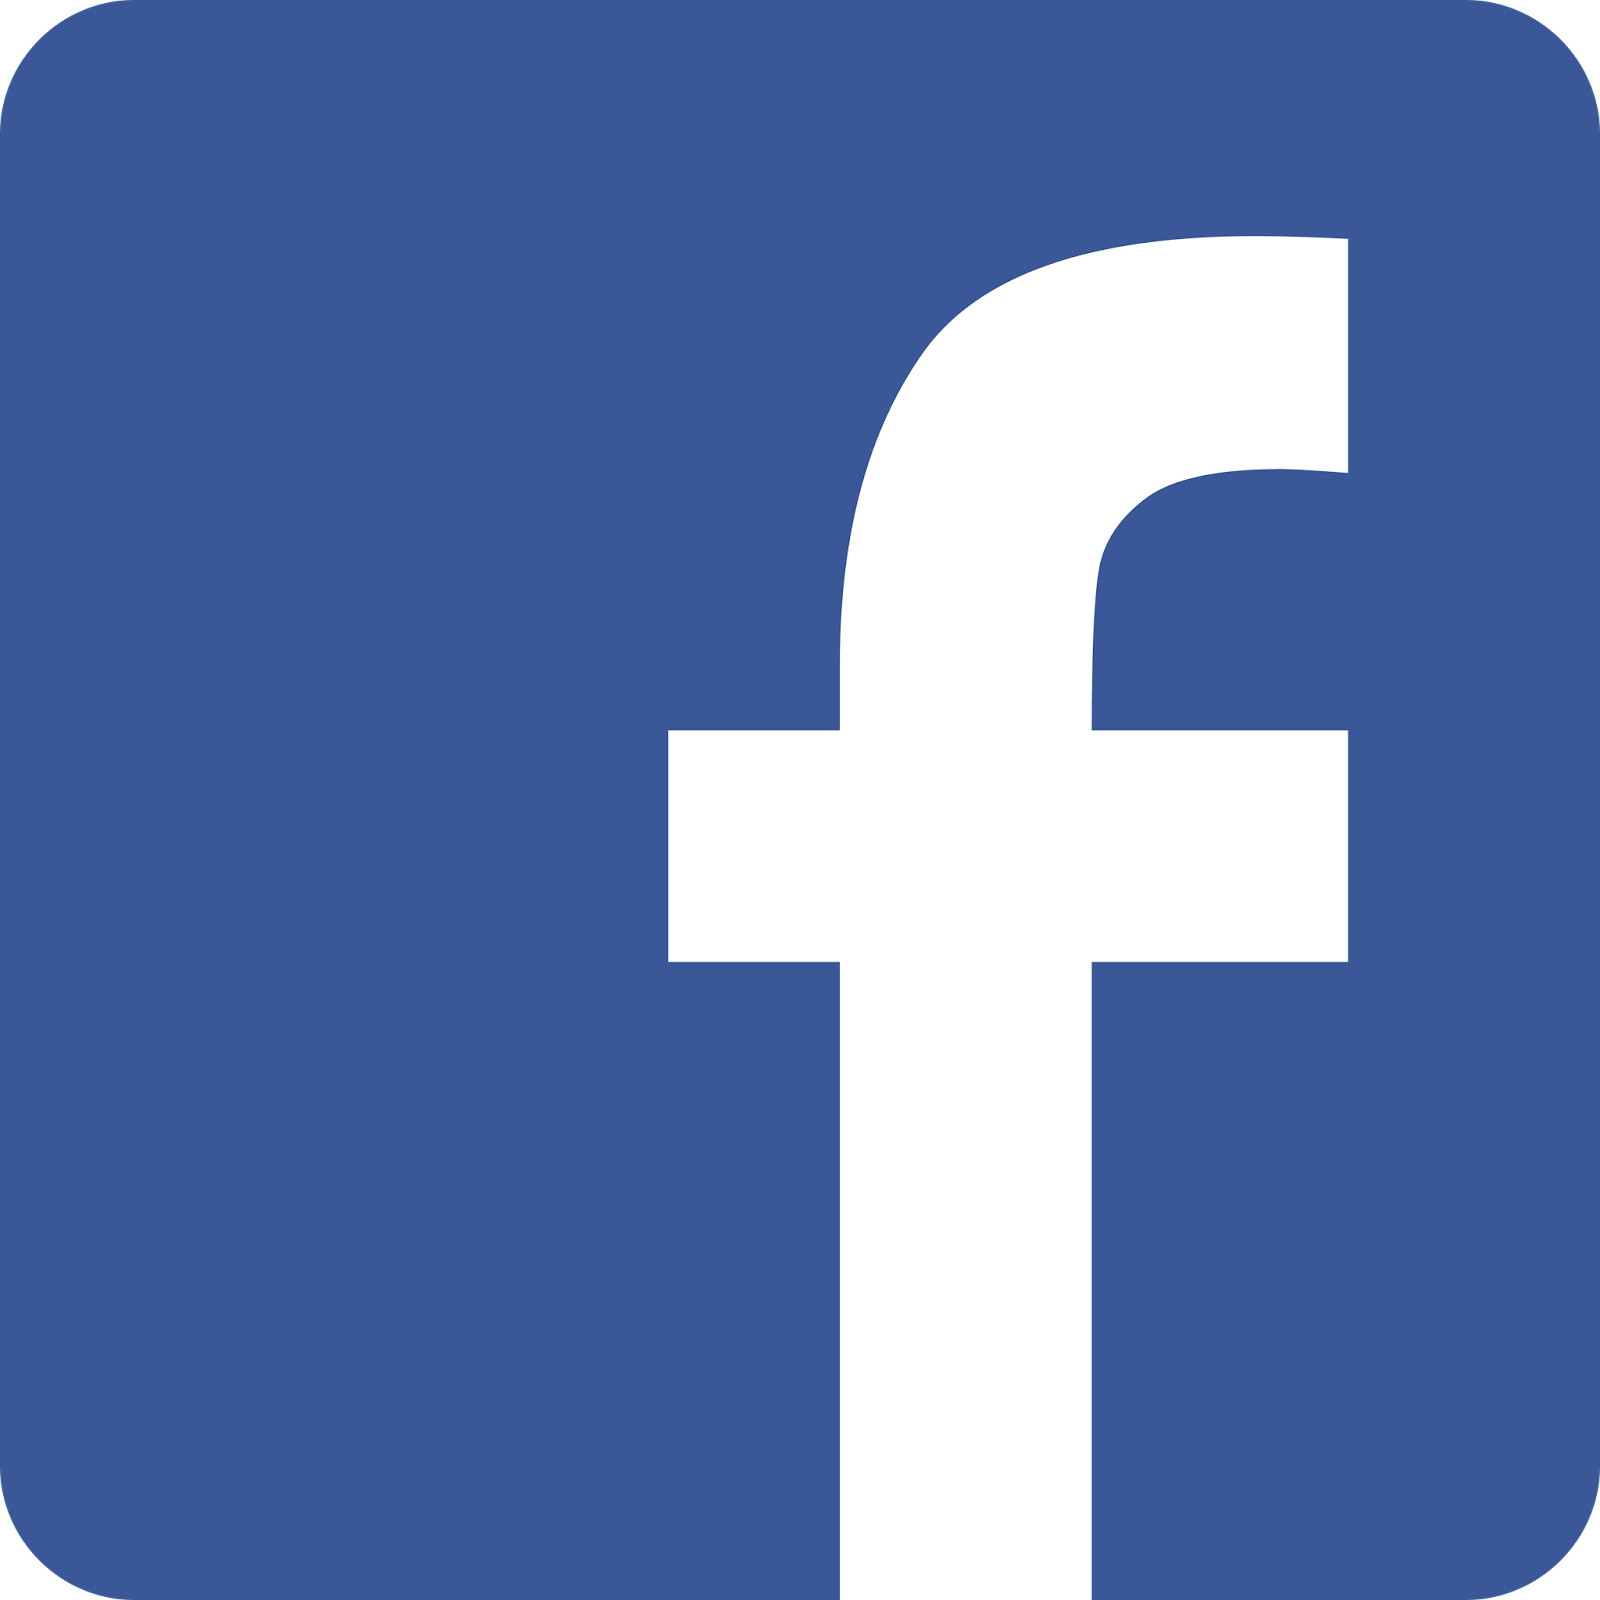 facebook-logo-png-38347.png